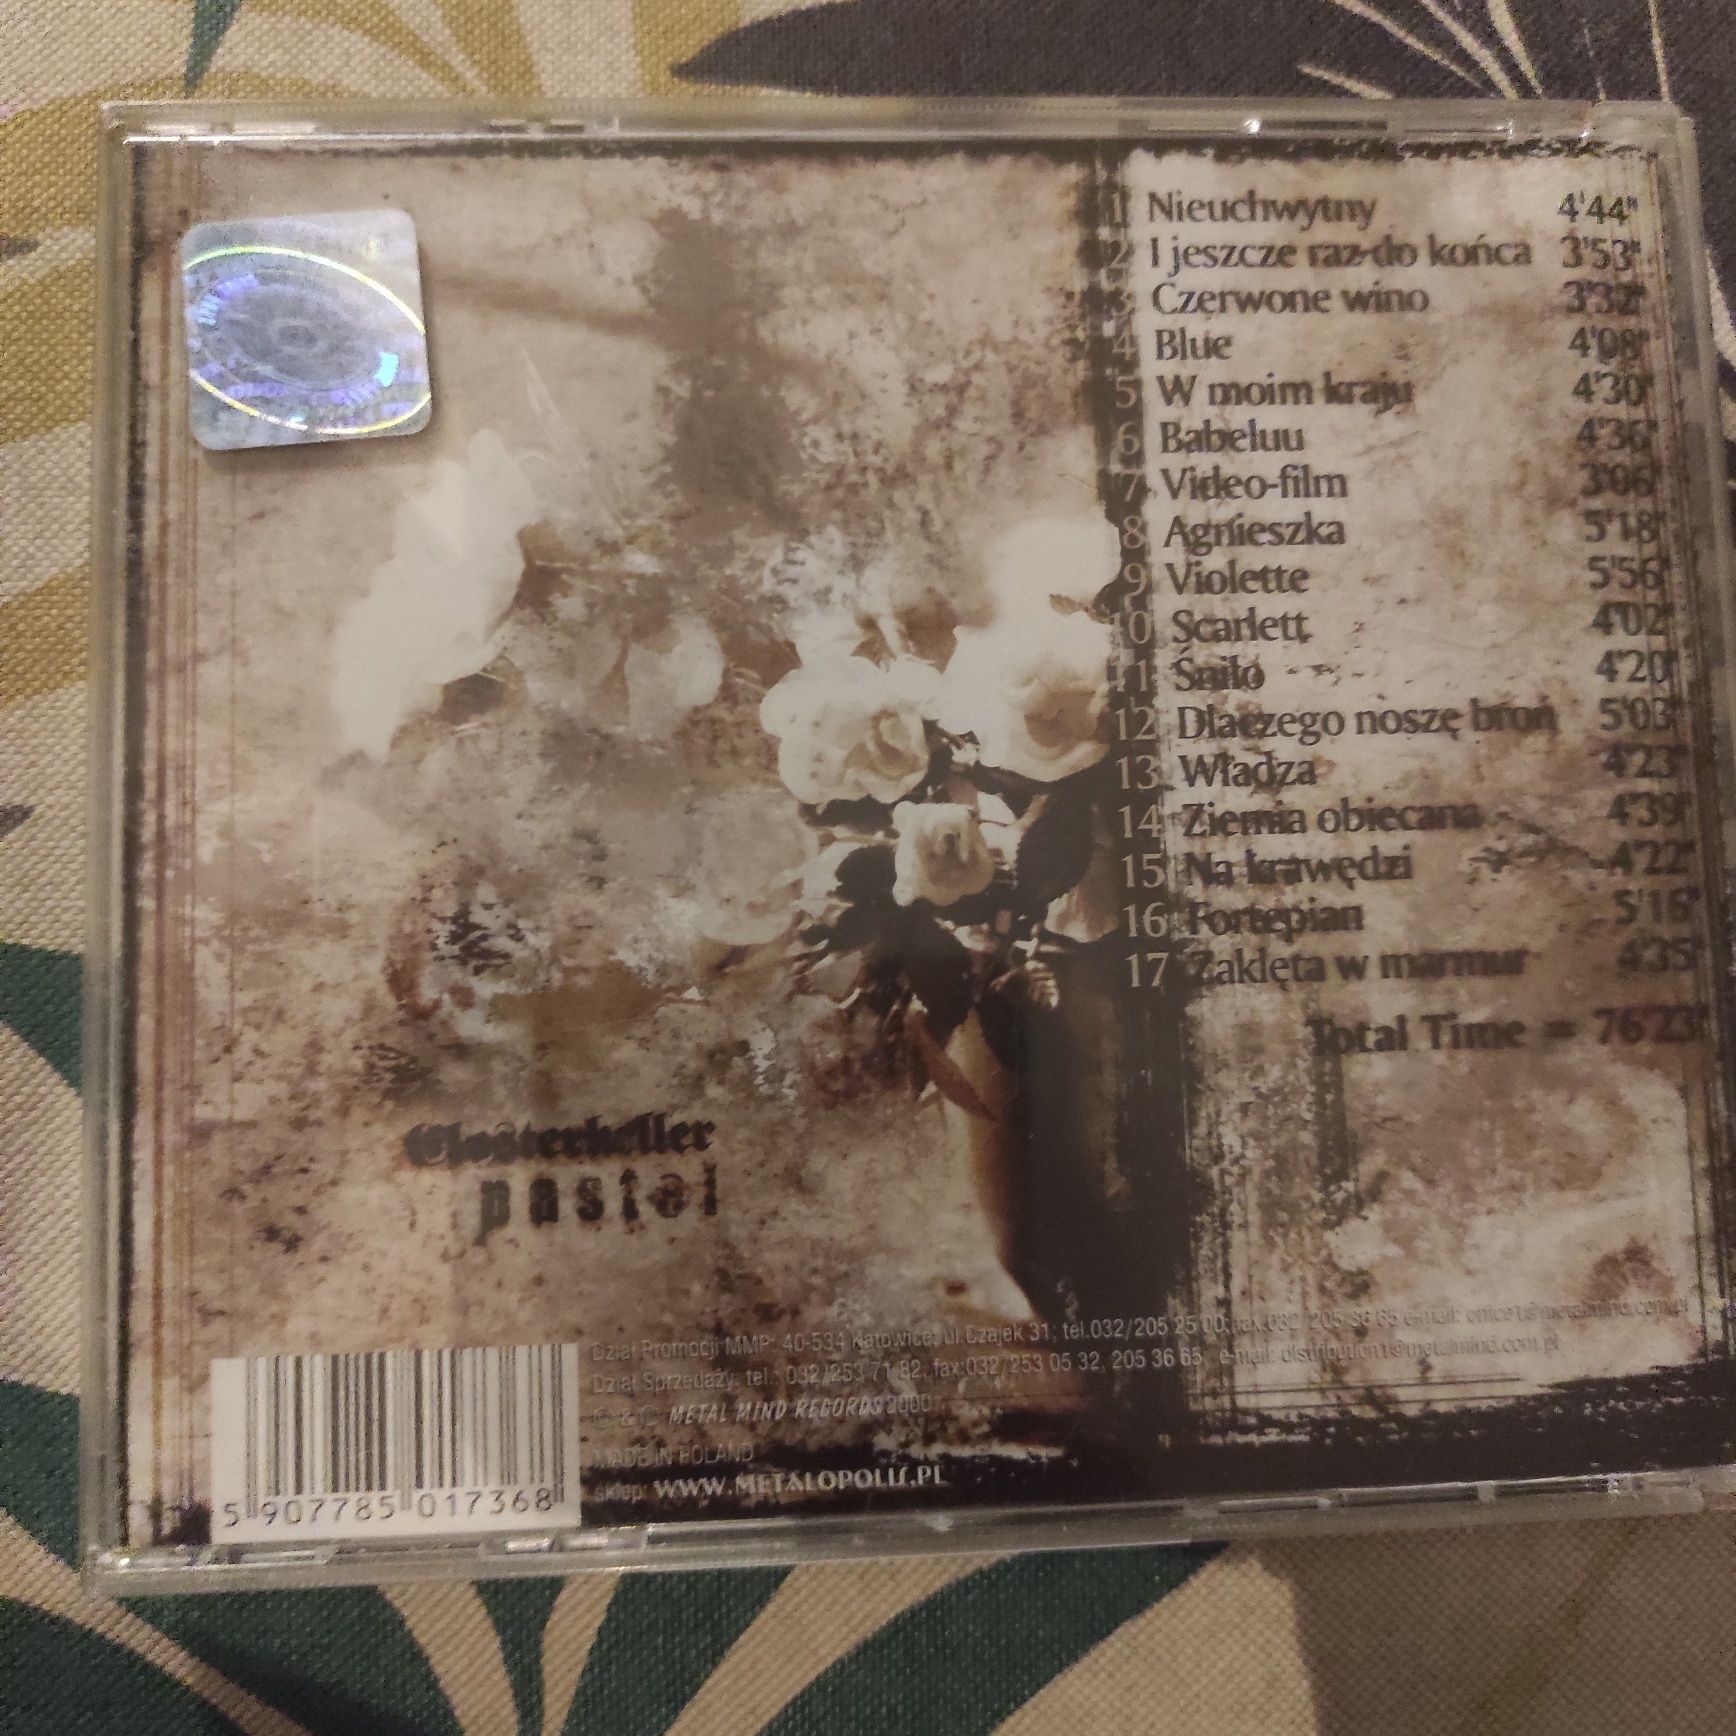 Closterkeller Pastel 2 płyty CD